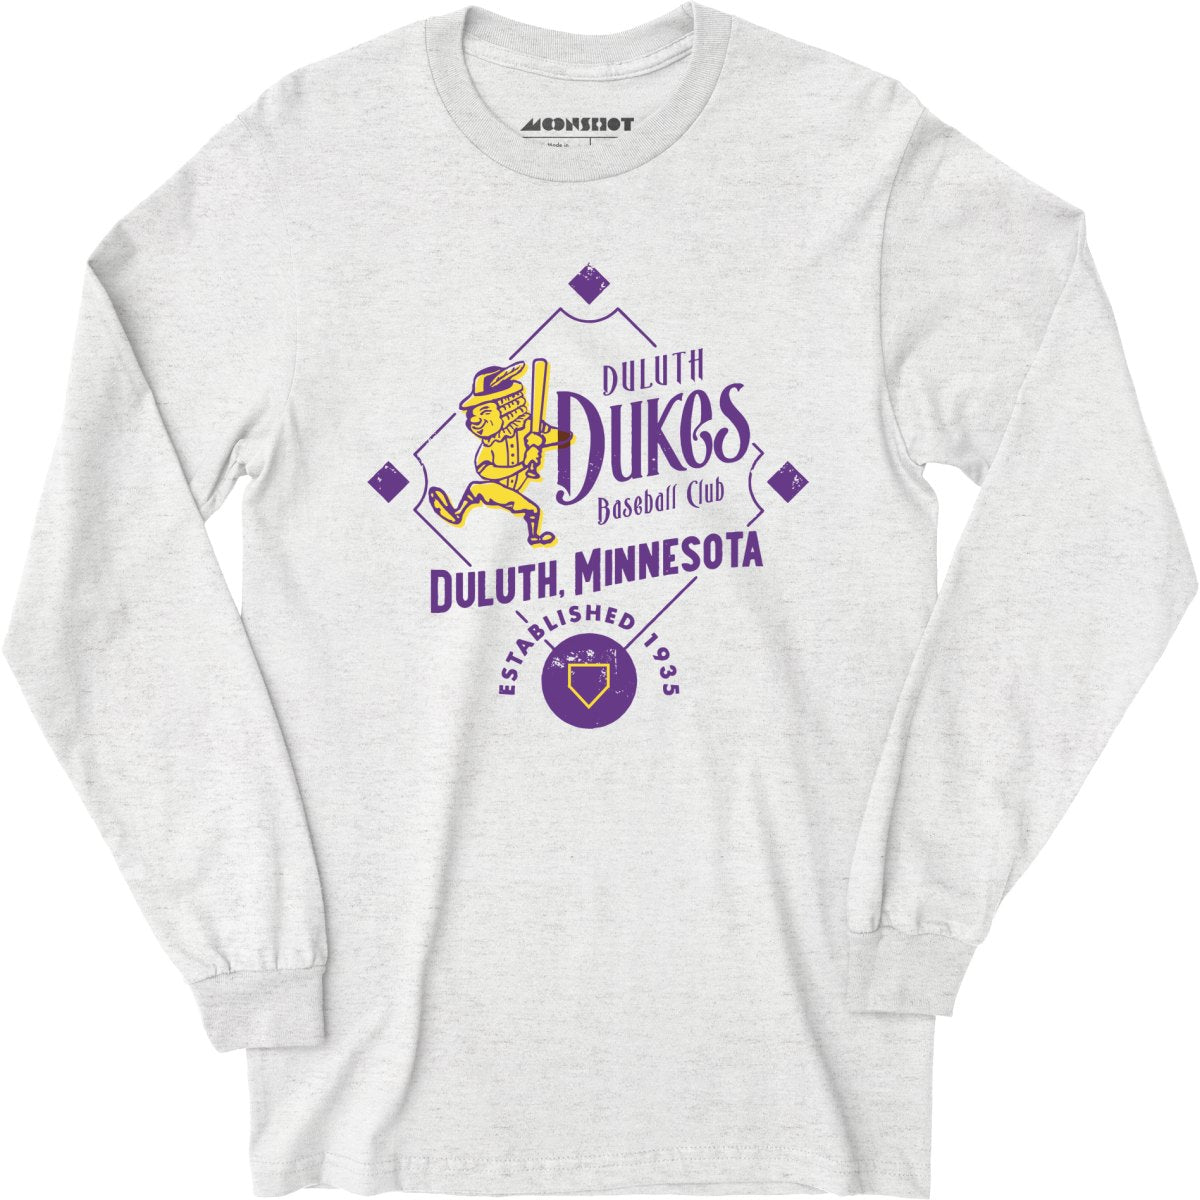 Duluth Dukes - Minnesota - Vintage Defunct Baseball Teams - Long Sleeve T-Shirt